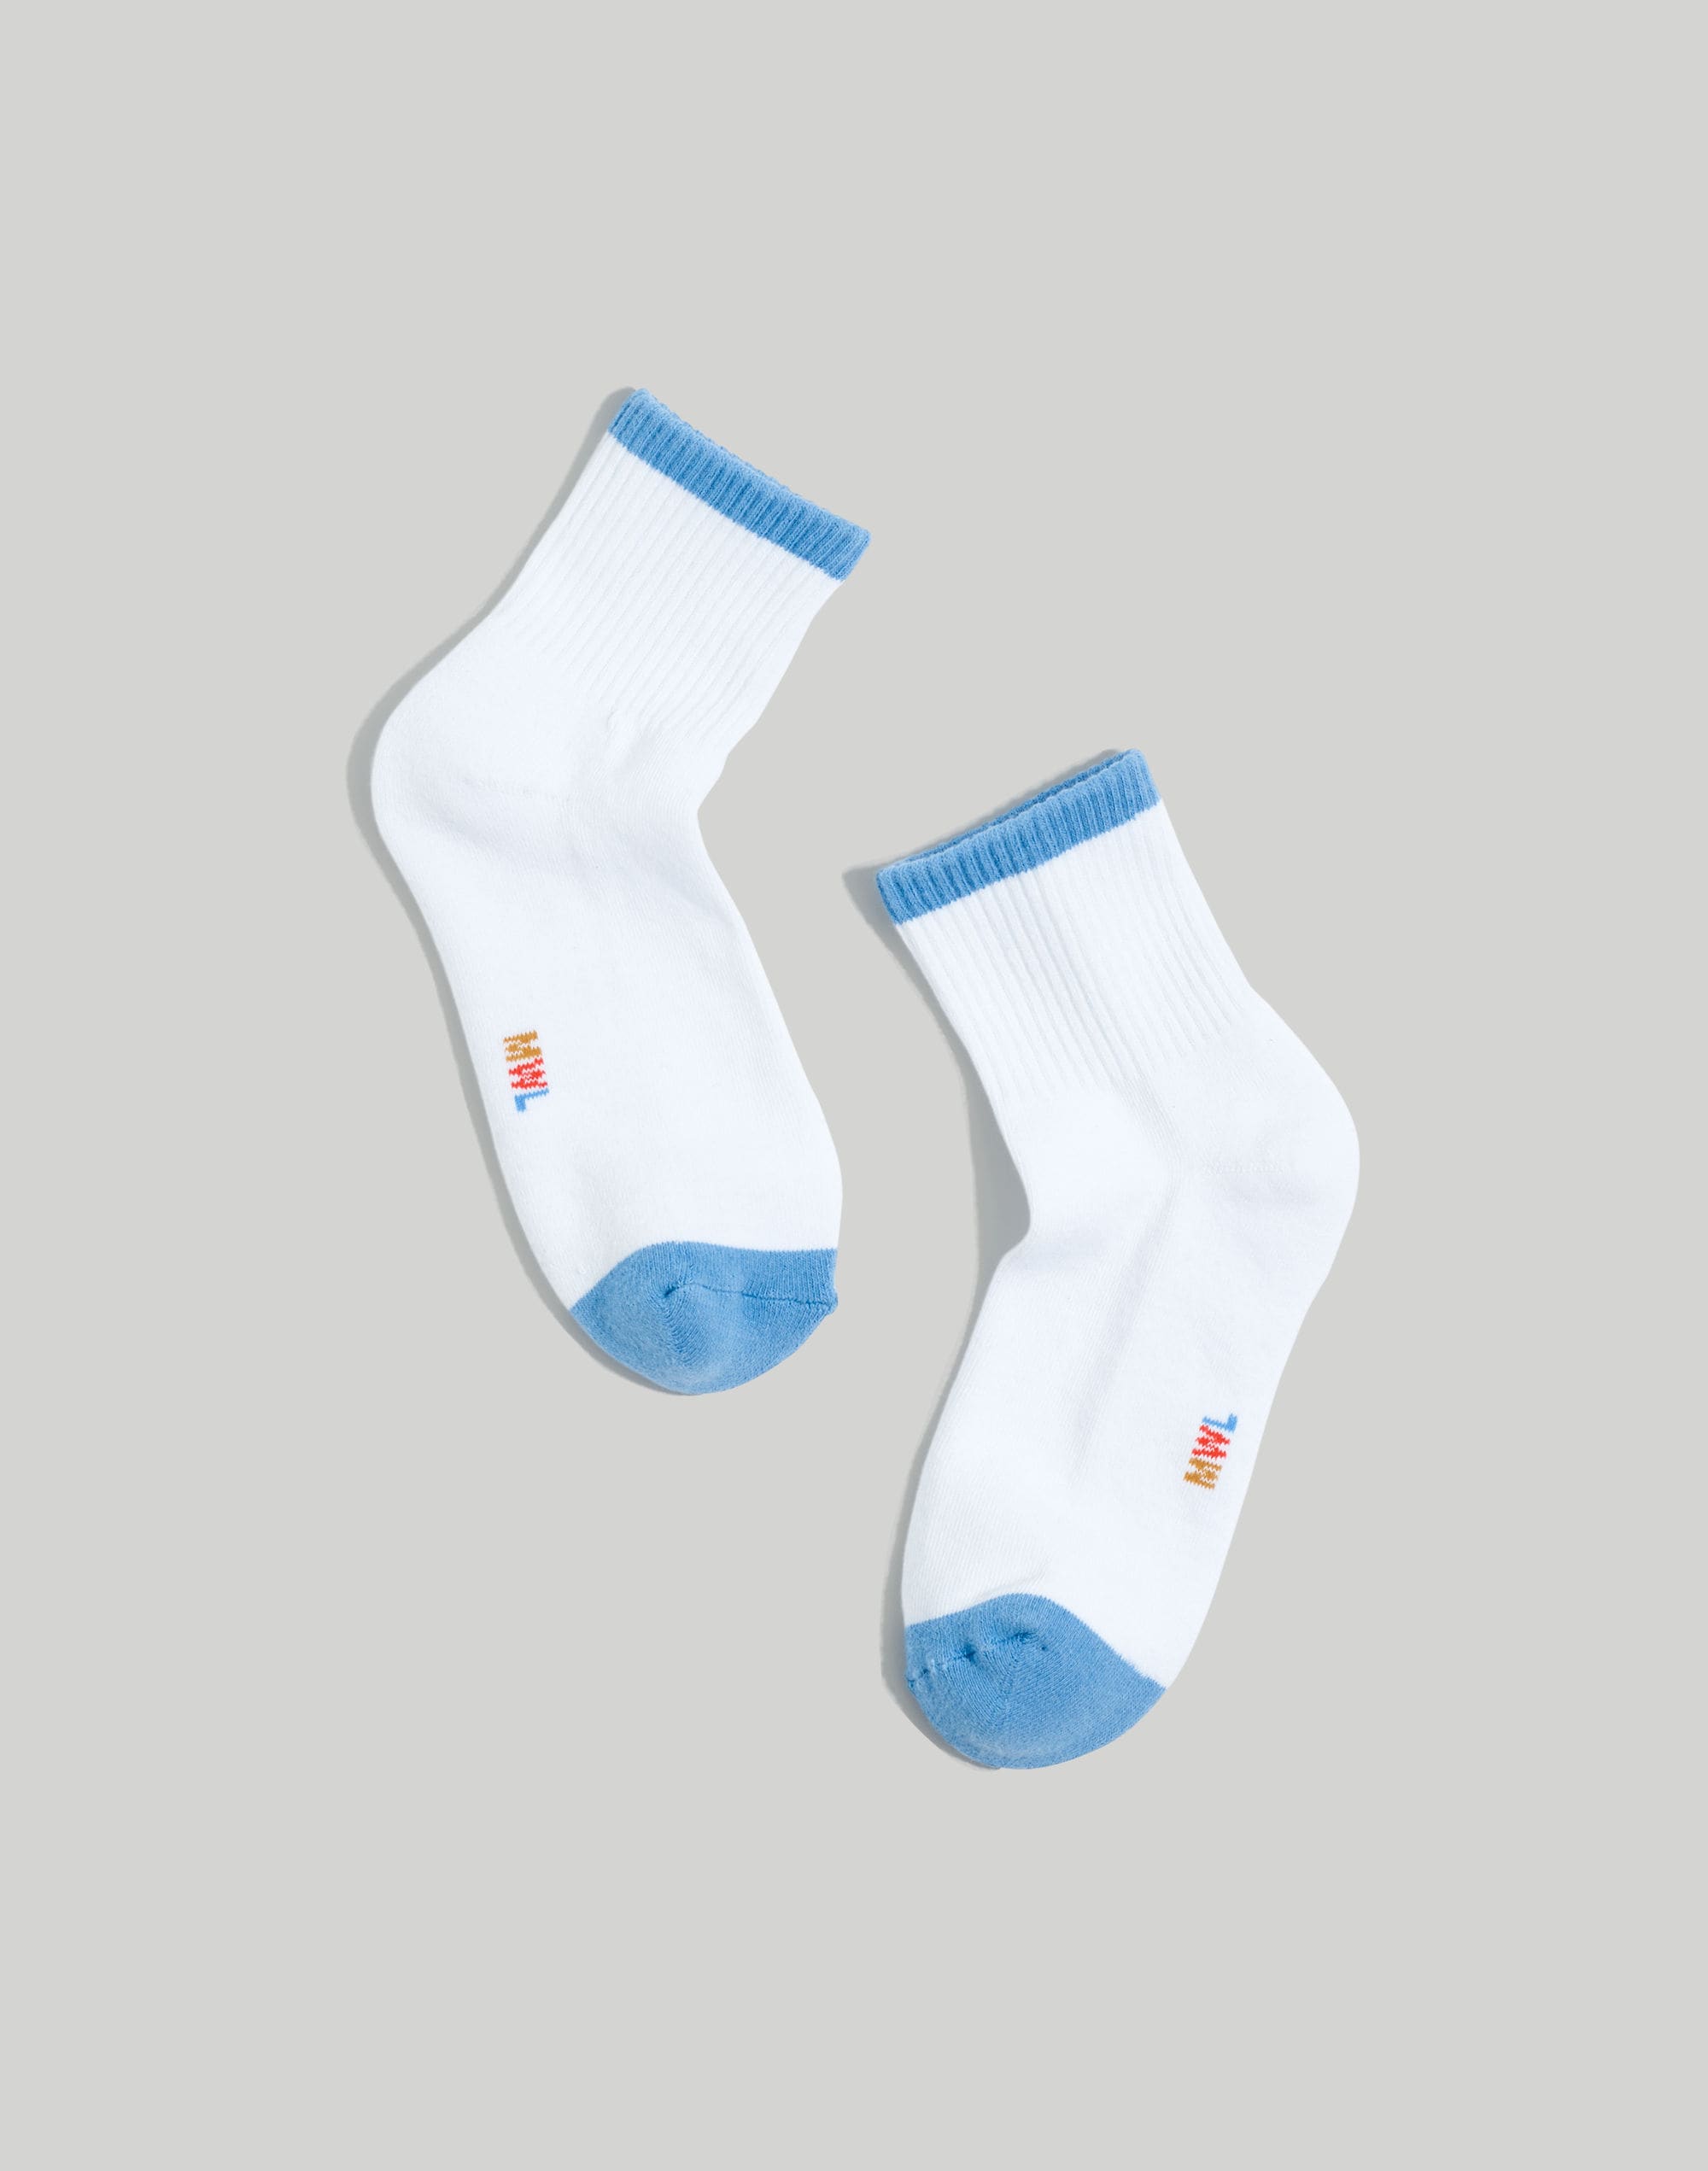 MWL Cloudlift Ankle Socks: Stripe Edition